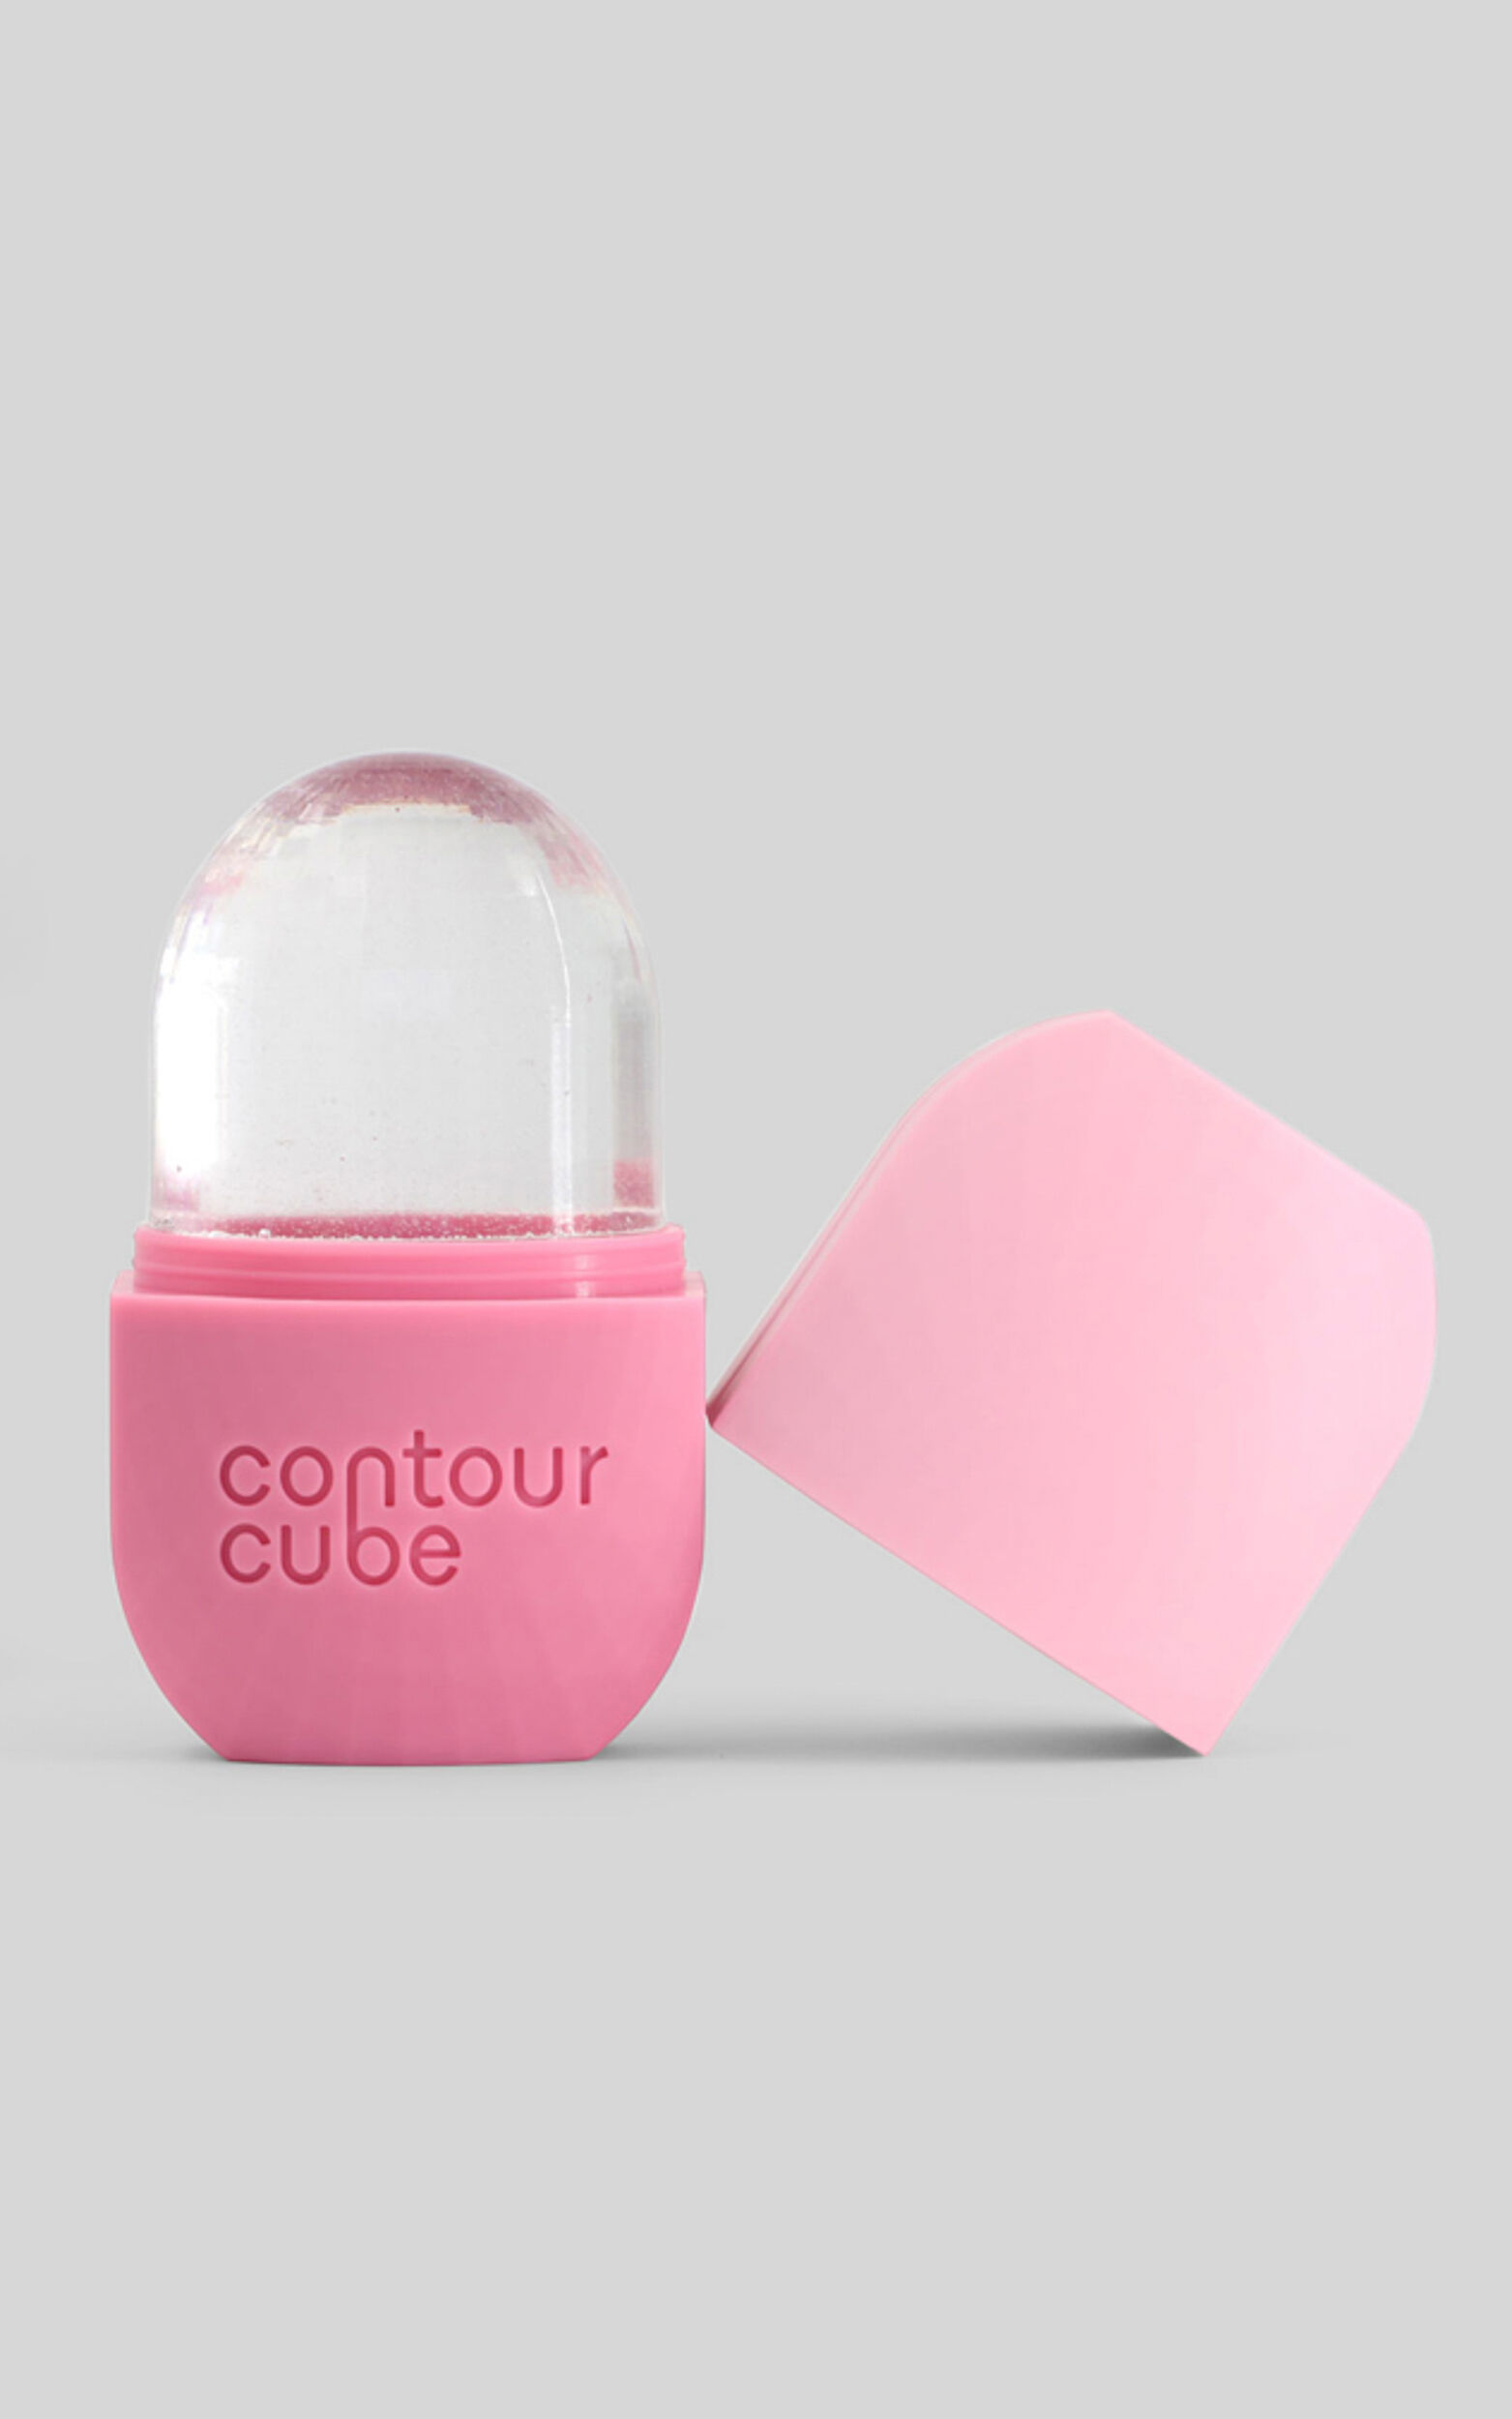 Contour Cube - Original Pink Contour Cube in Pink - NoSize, PNK1